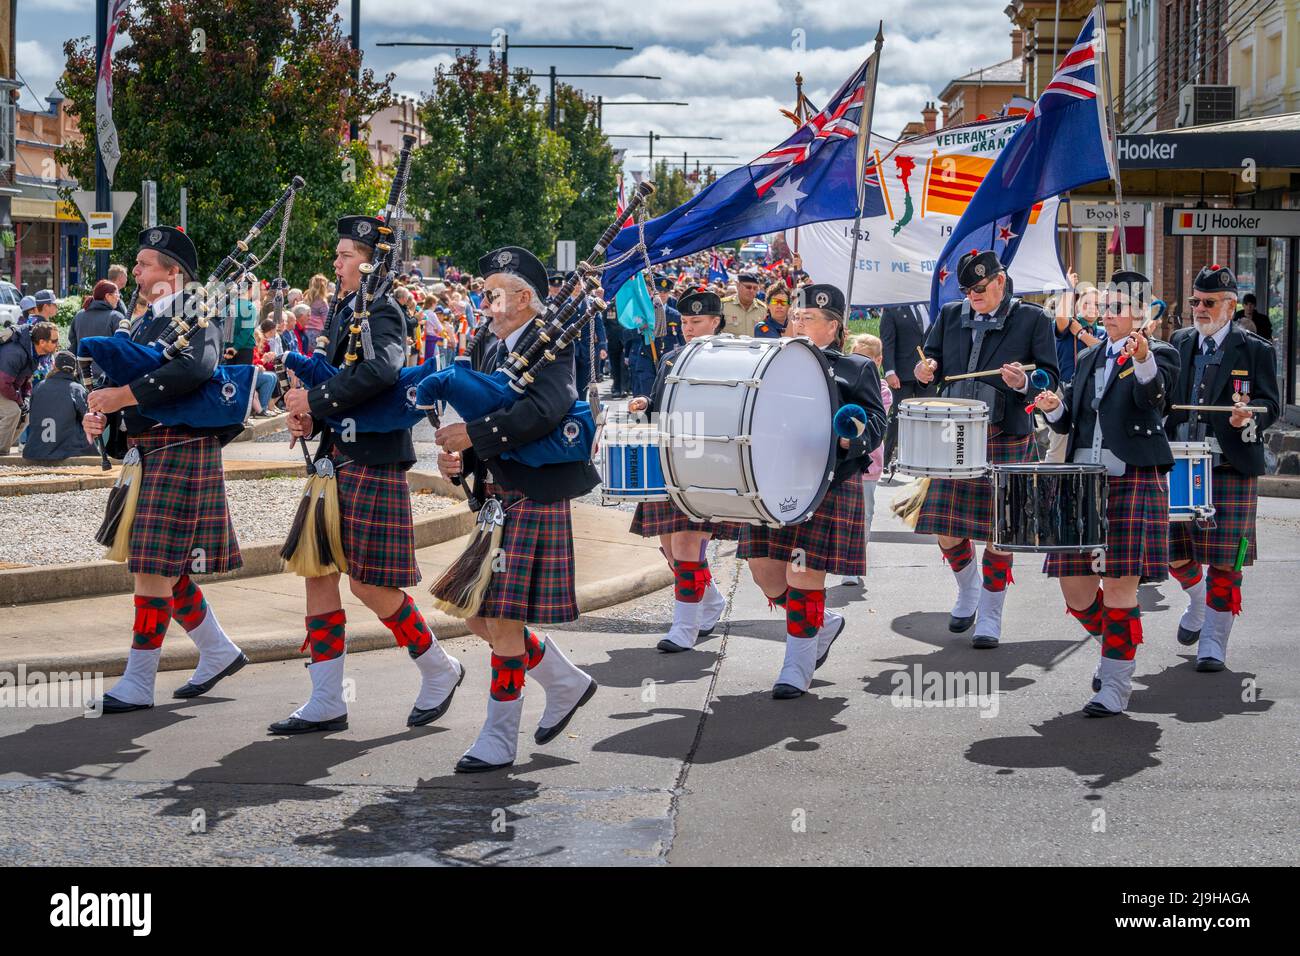 Colourful street parade to celebrate the opening of Glen Innes Celtic Festival, NSW Australia Stock Photo